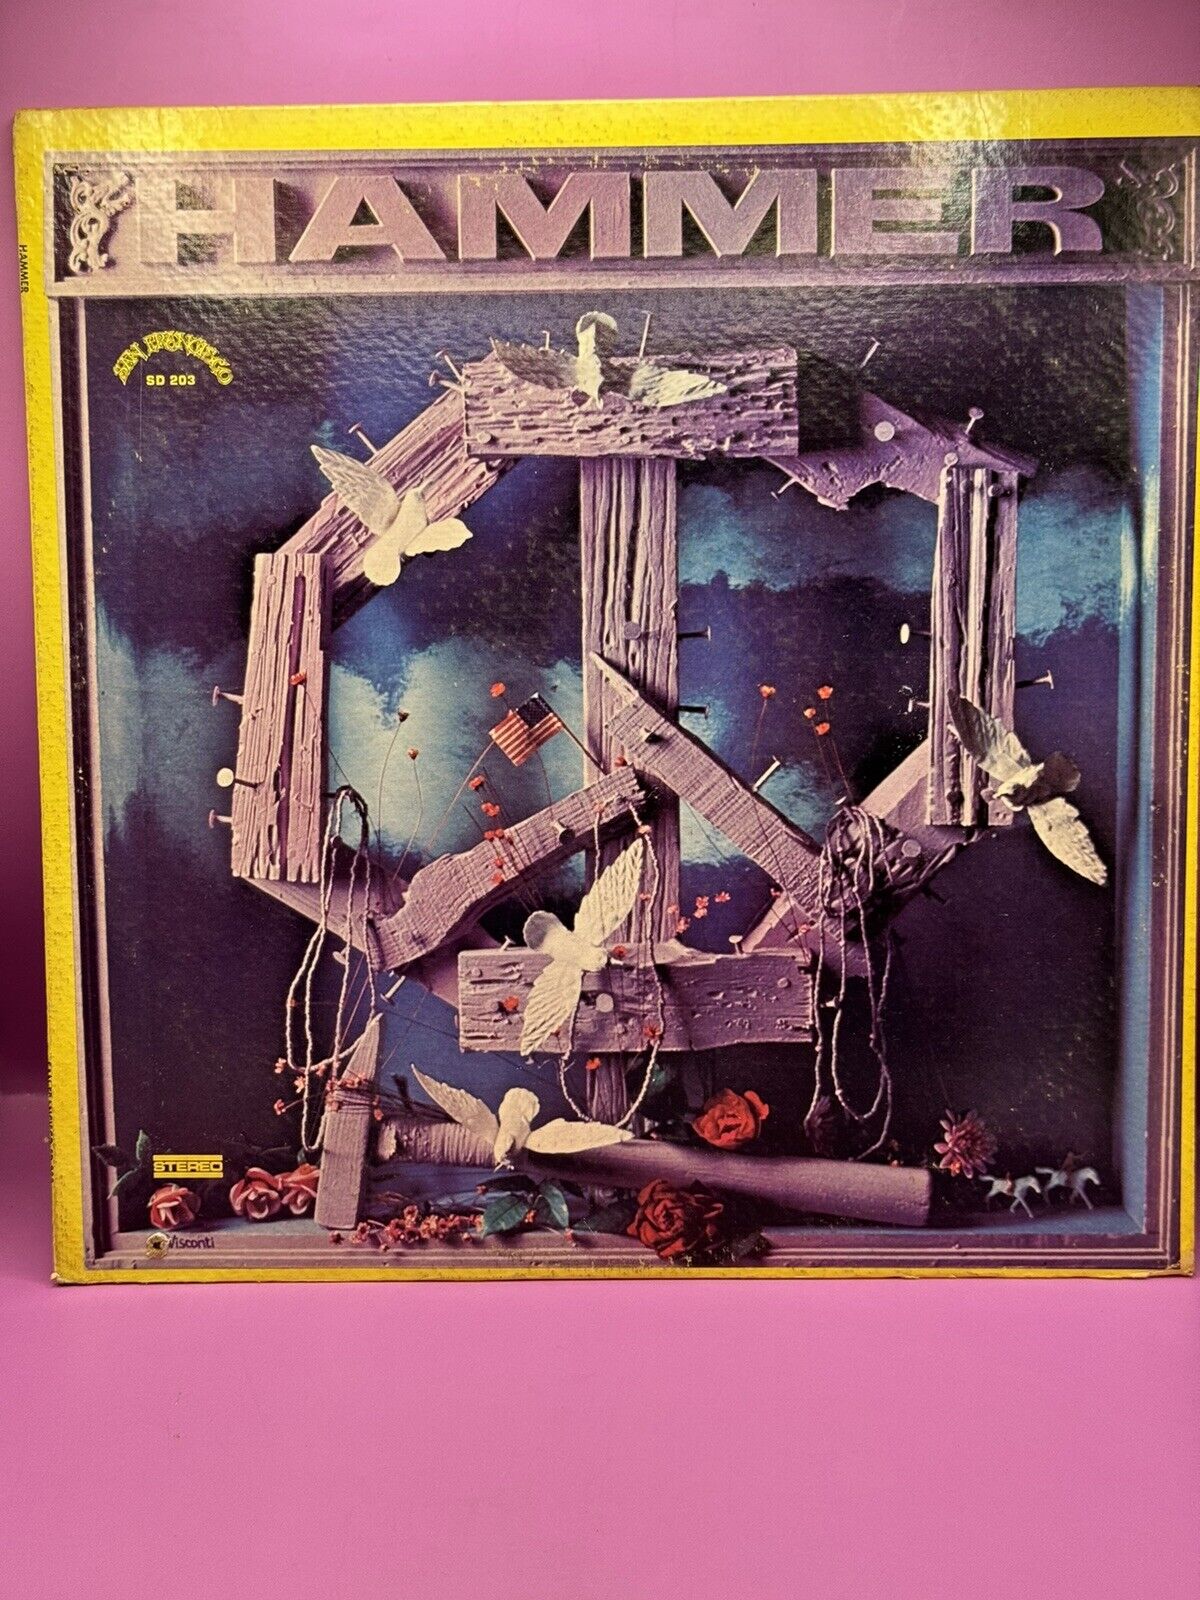 Hammer - Self Titled - SD 203 - 1970 - LP - VG+/VG+